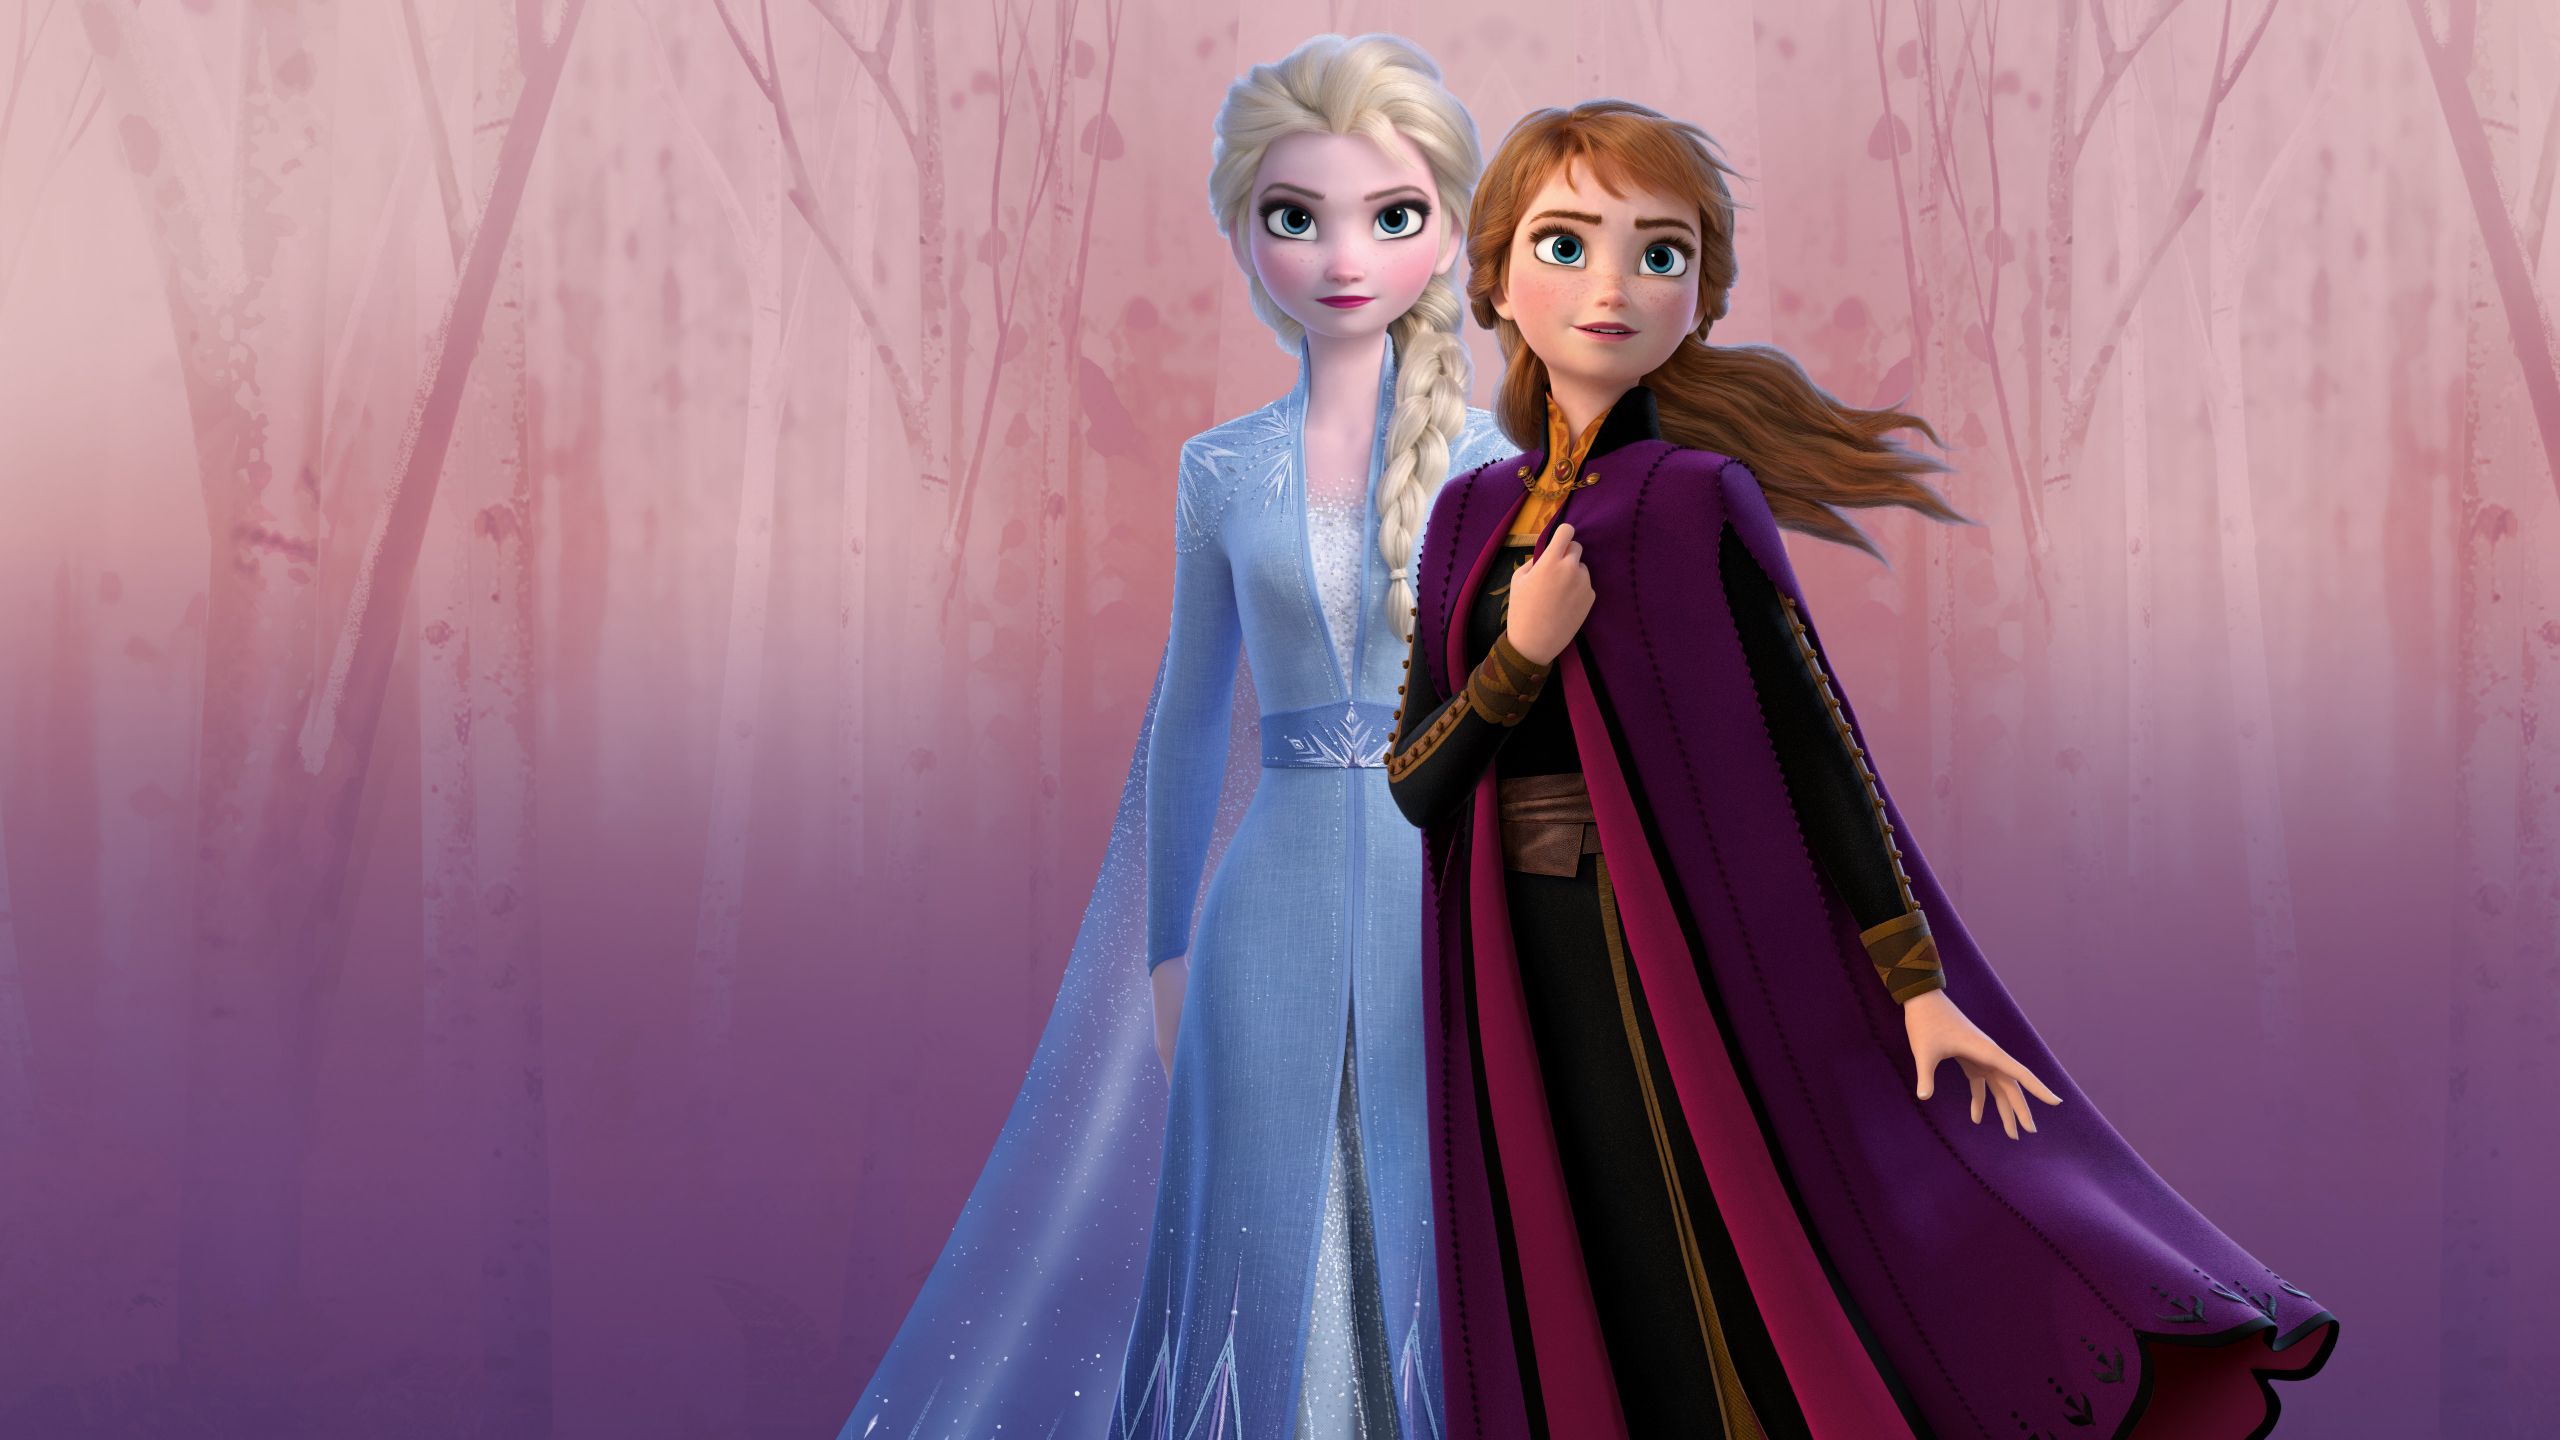 Elsa and Anna Frozen Disney Wallpapers.